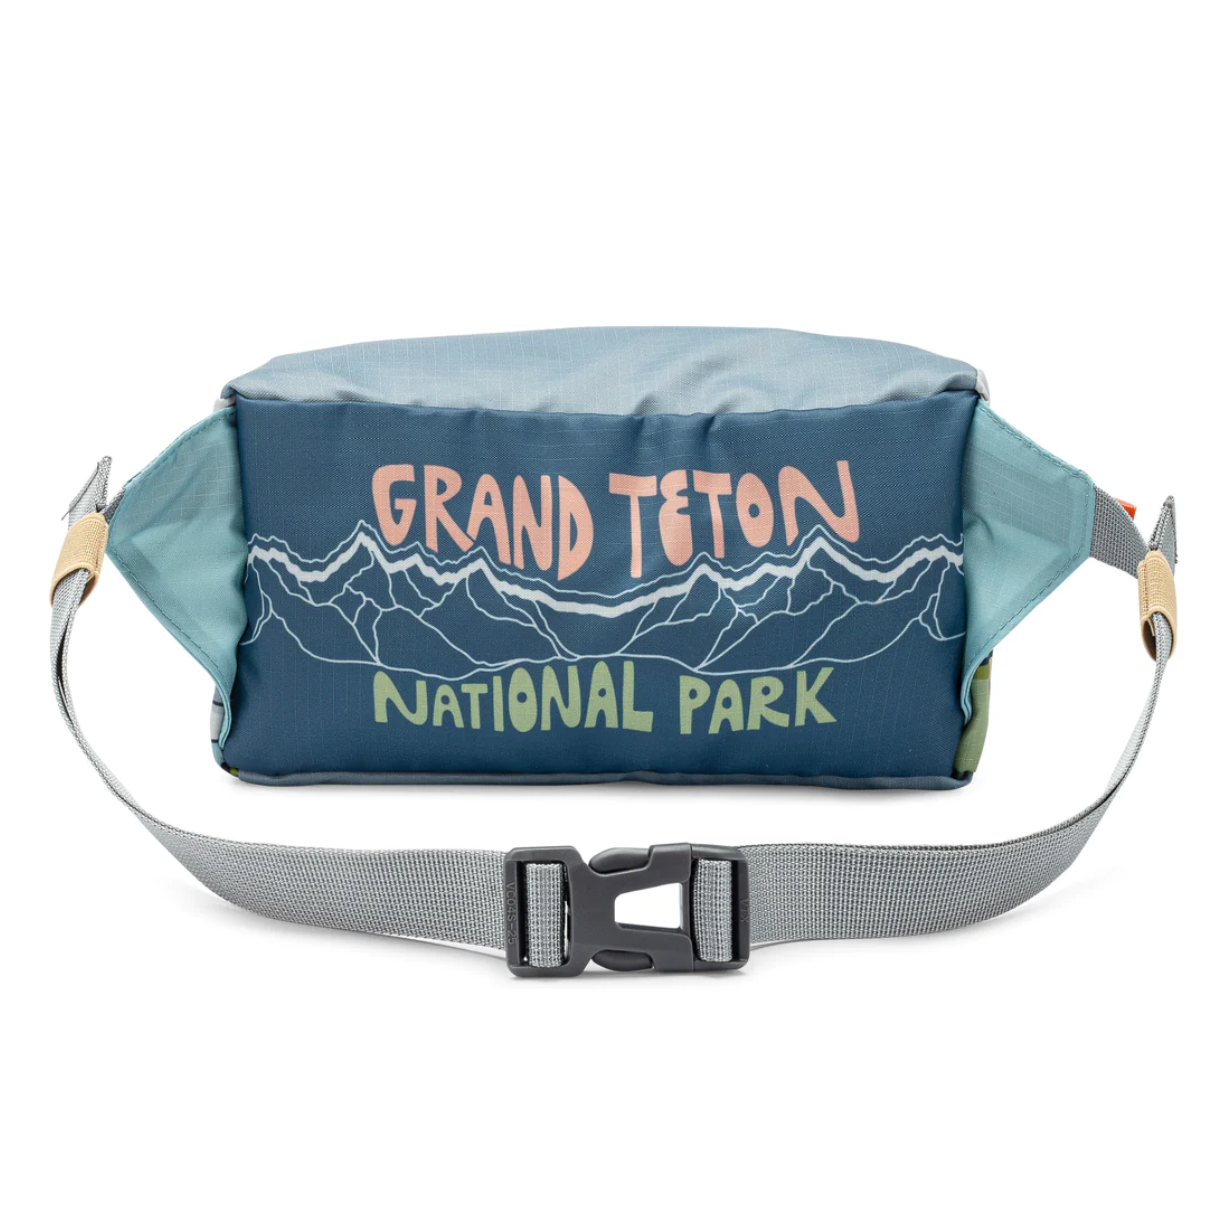 Grand Teton National Park Fanny Pack/Hip Pack